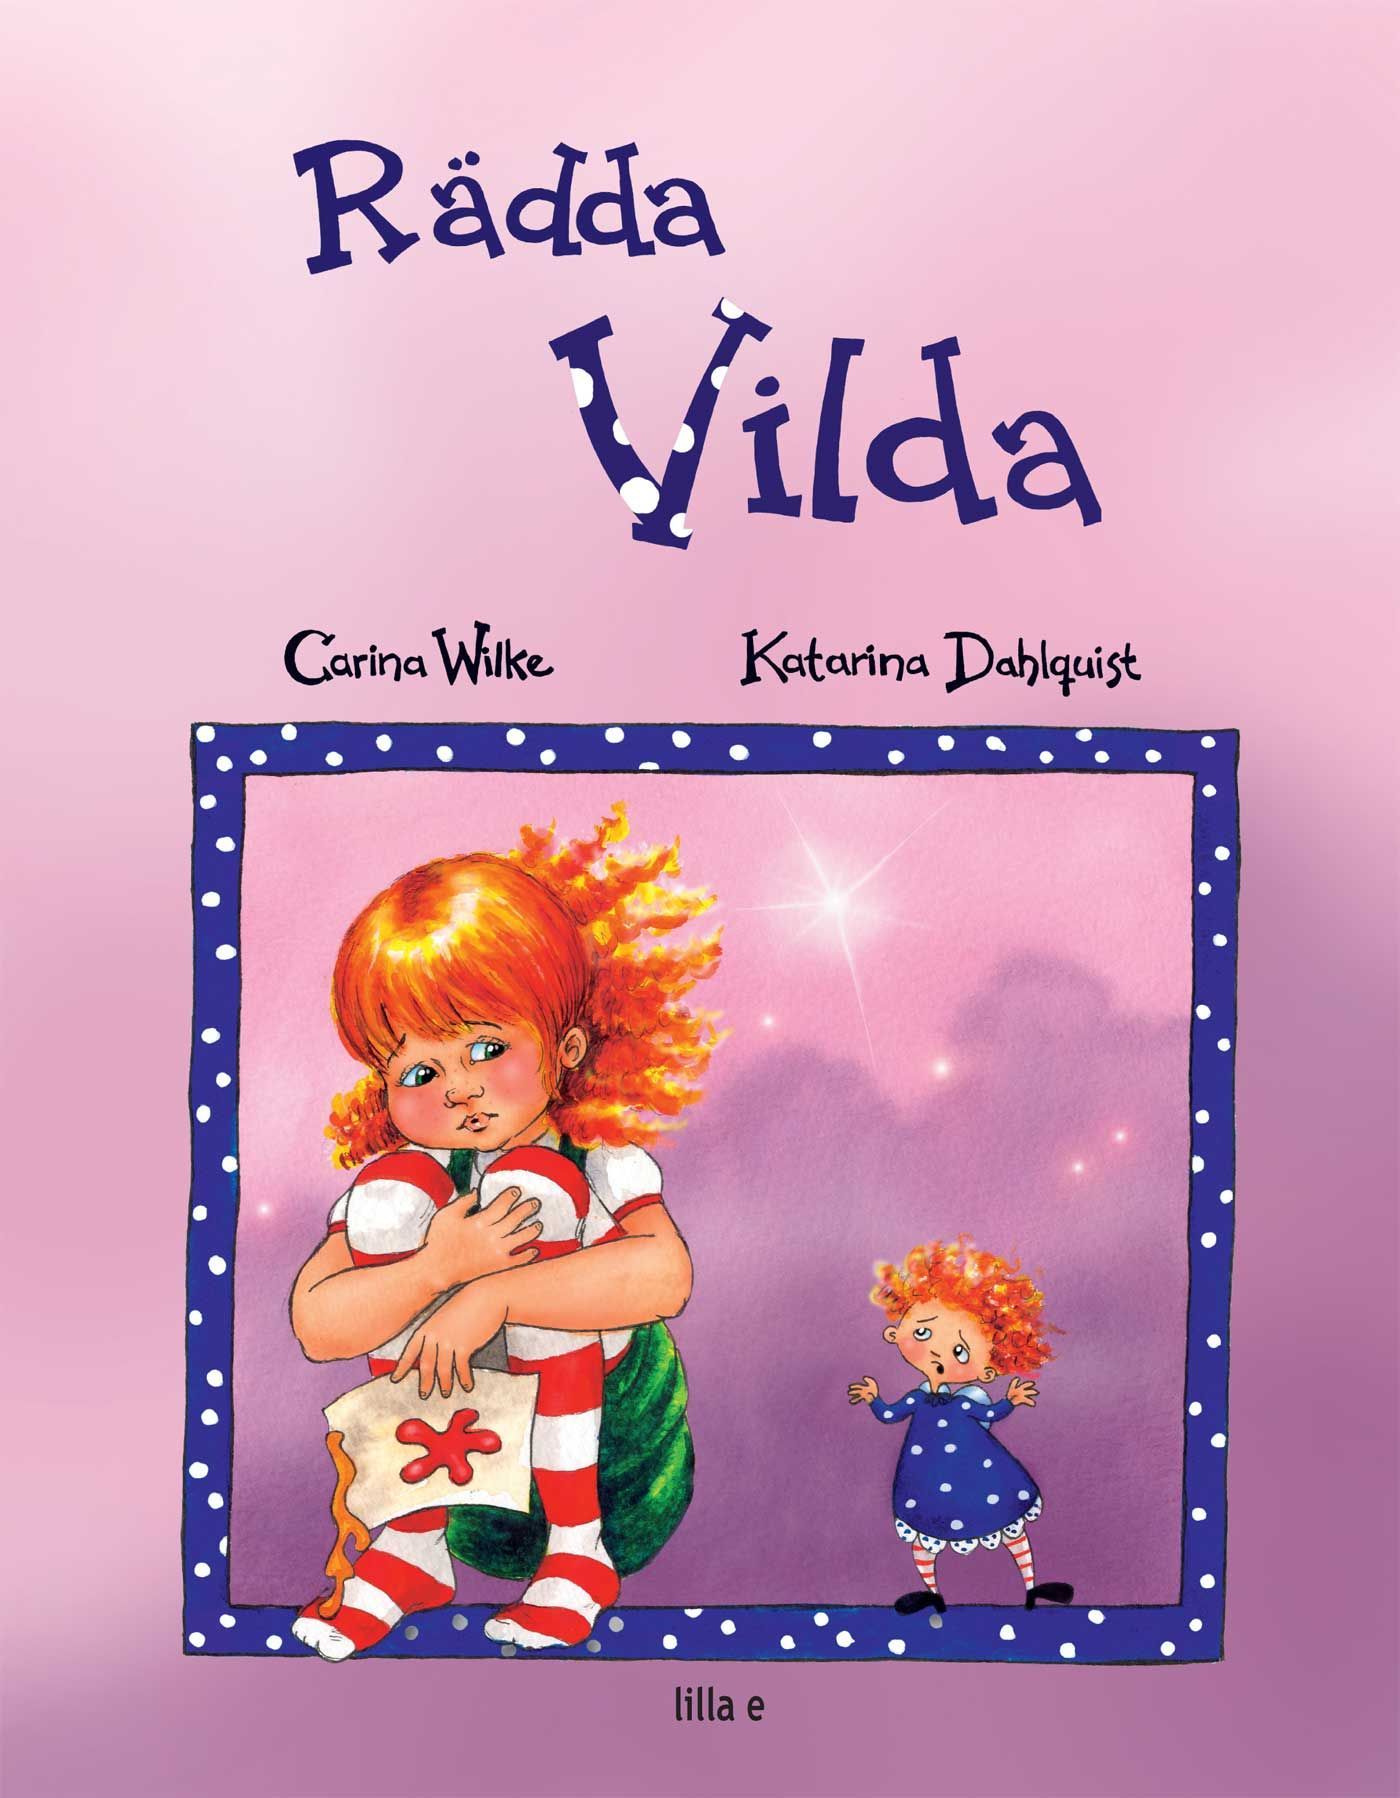 Rädda Vilda /Rädda Molly, e-bog af Carina Wilke